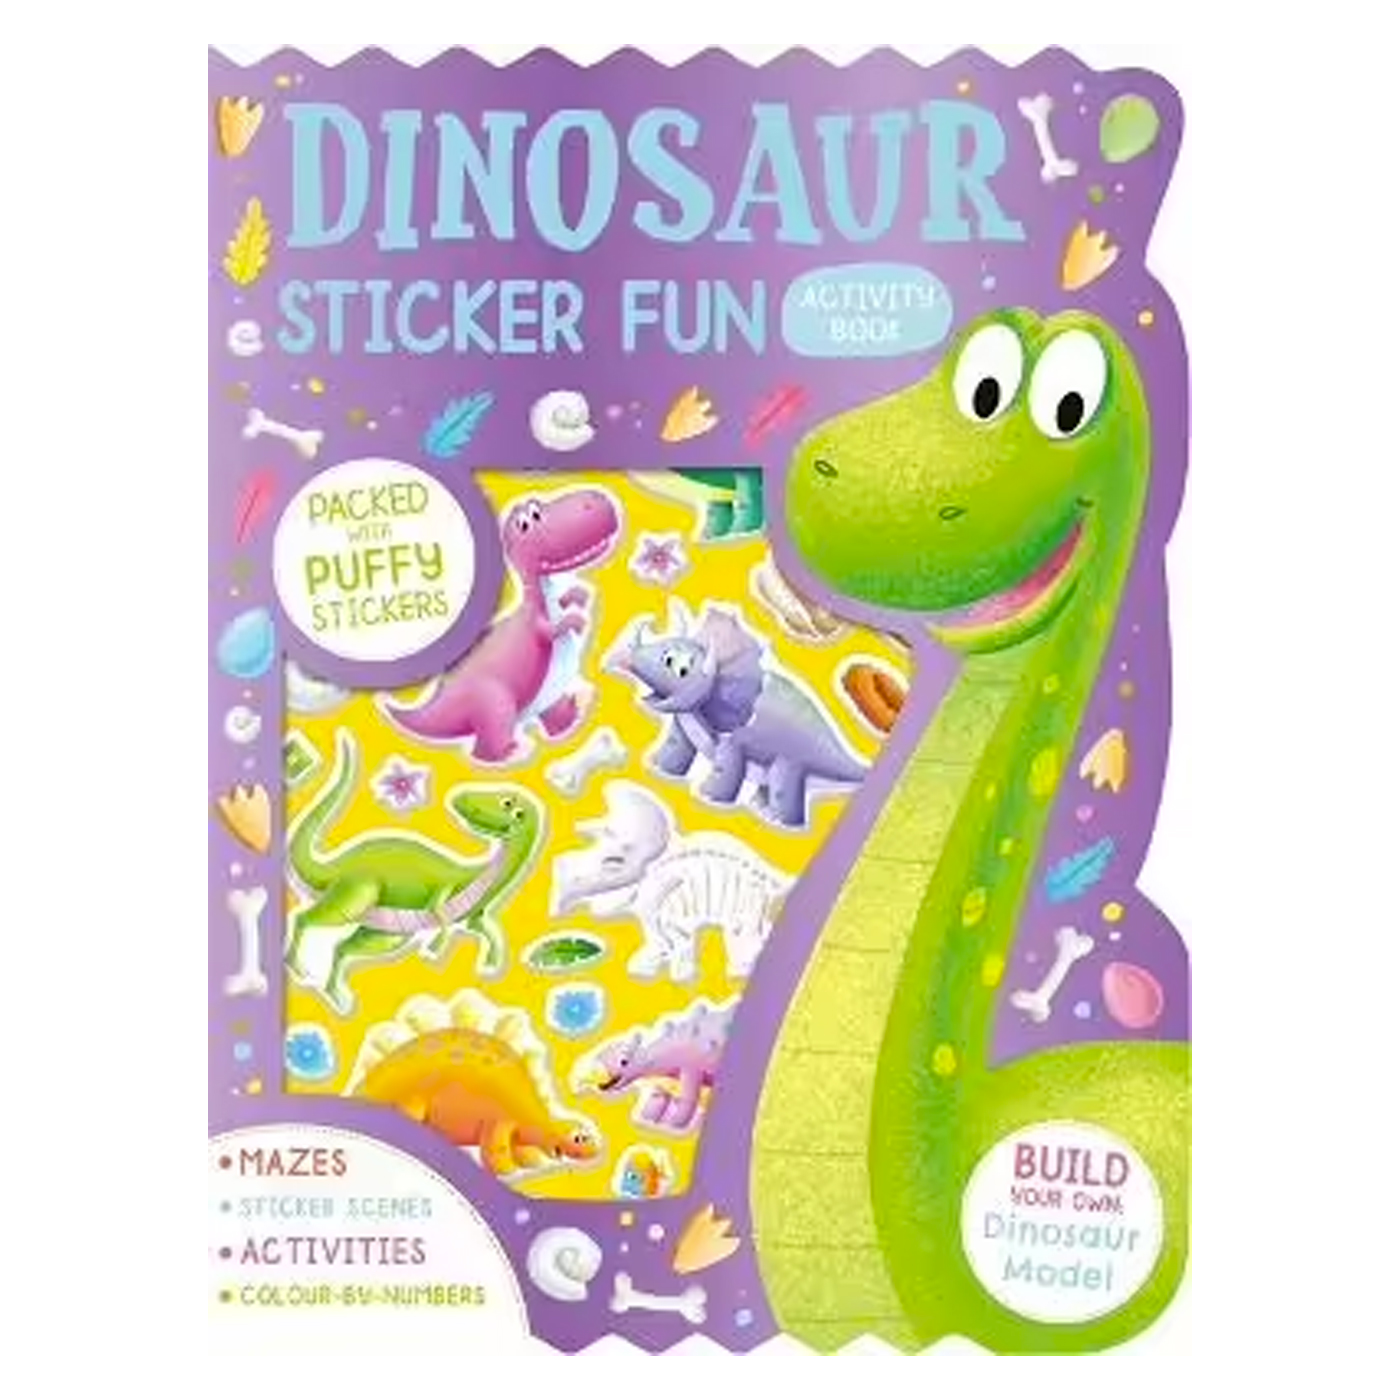  Dinosaur Sticker Fun